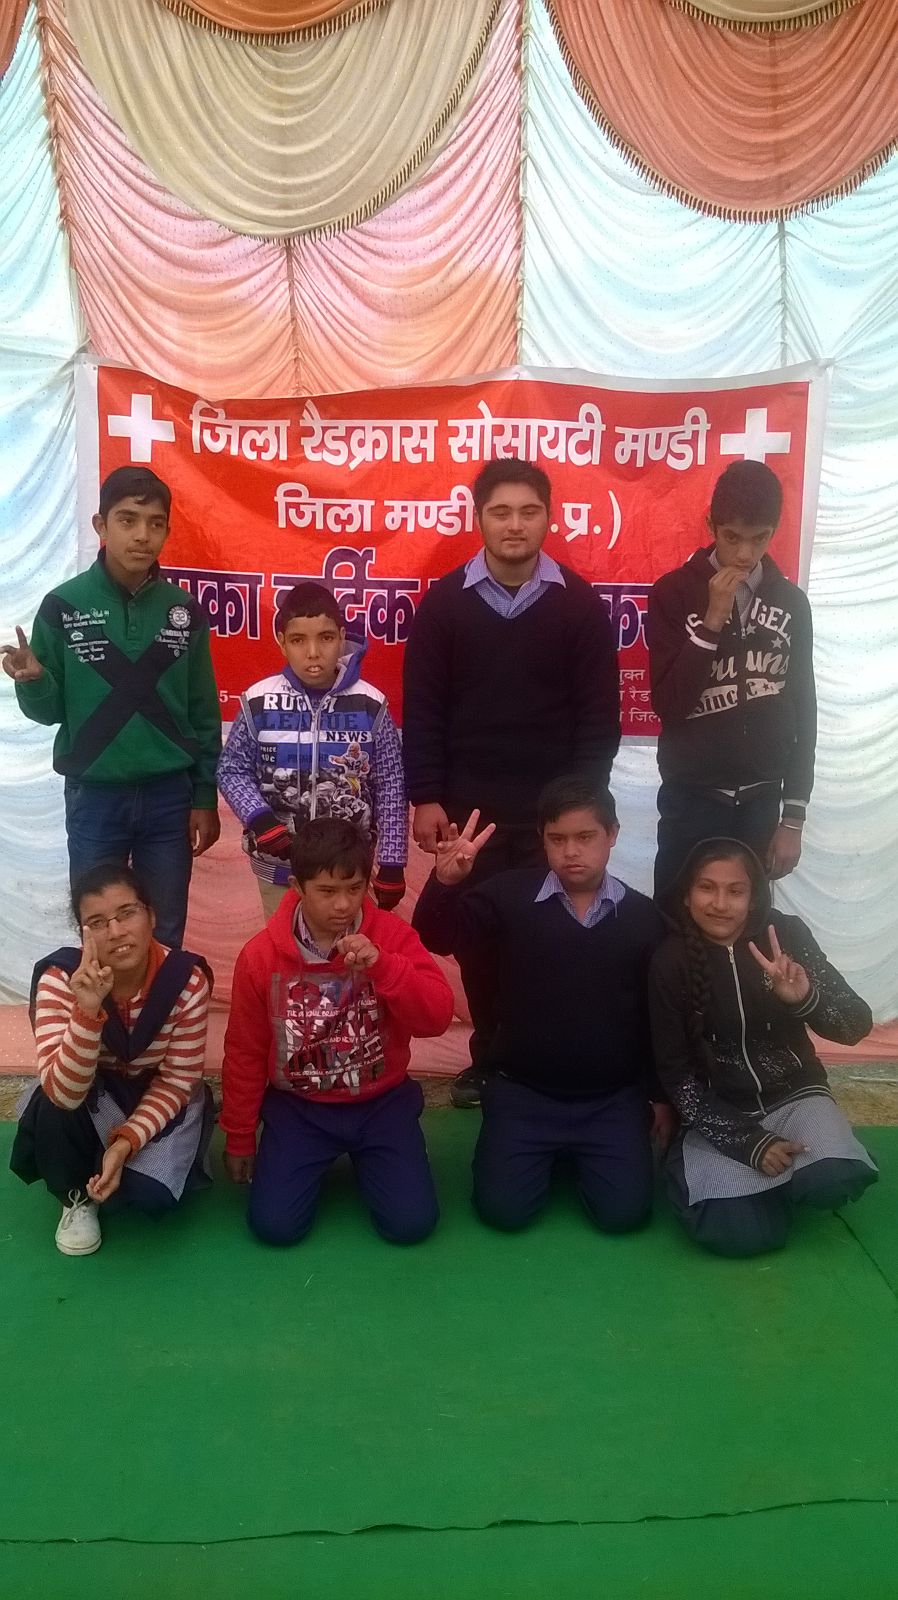 Sakar school children participate in a tournament